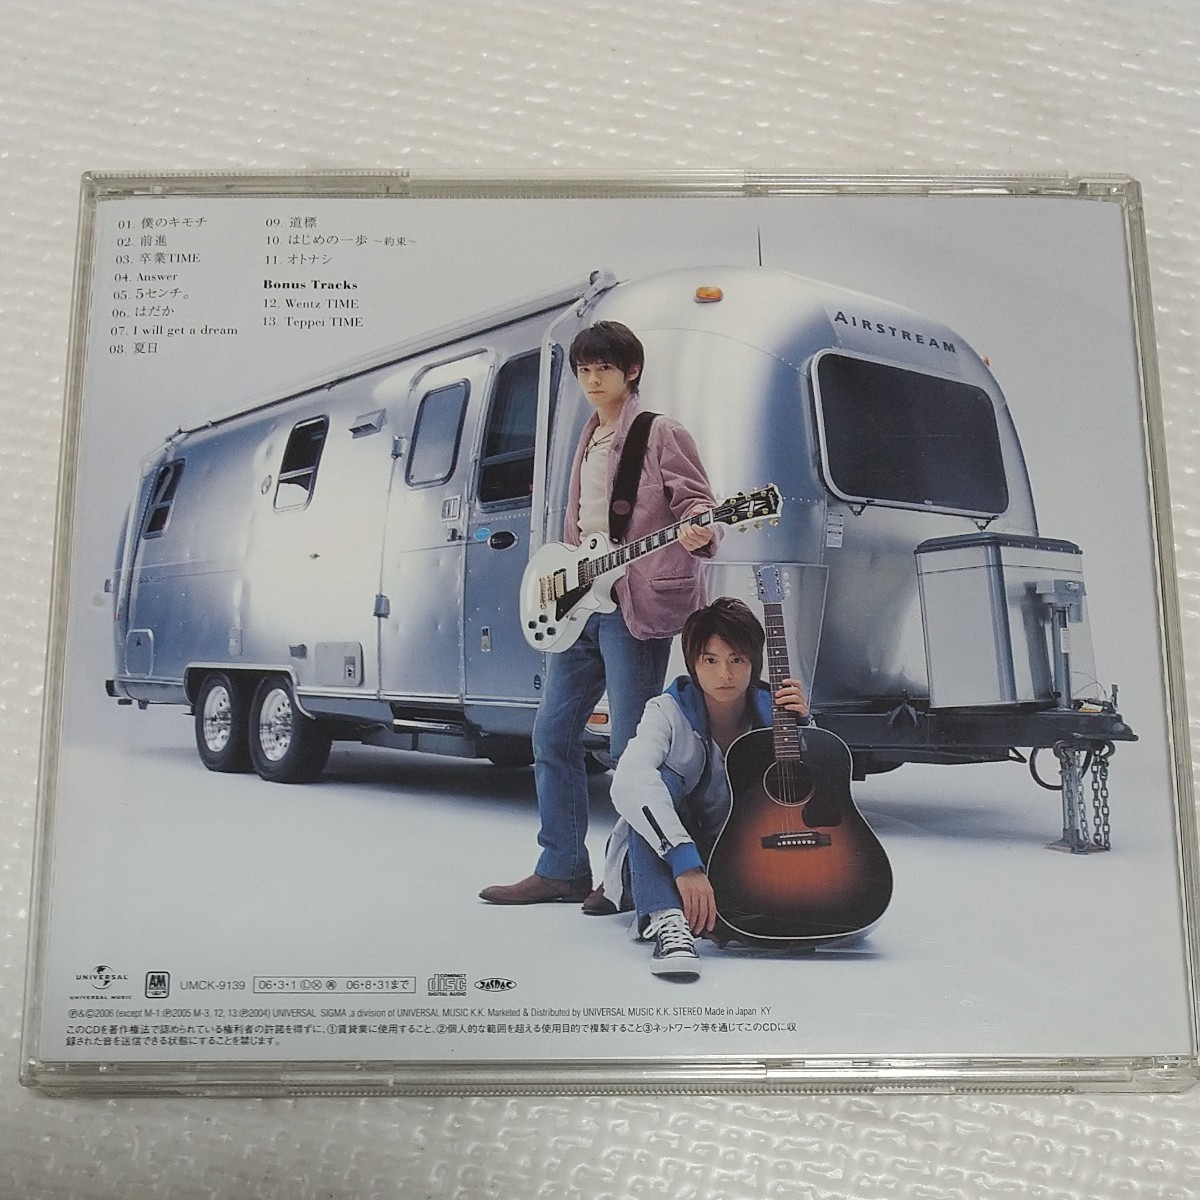 WaTワット　CD3枚まとめ売り＋レプリカサイン入りギターピック